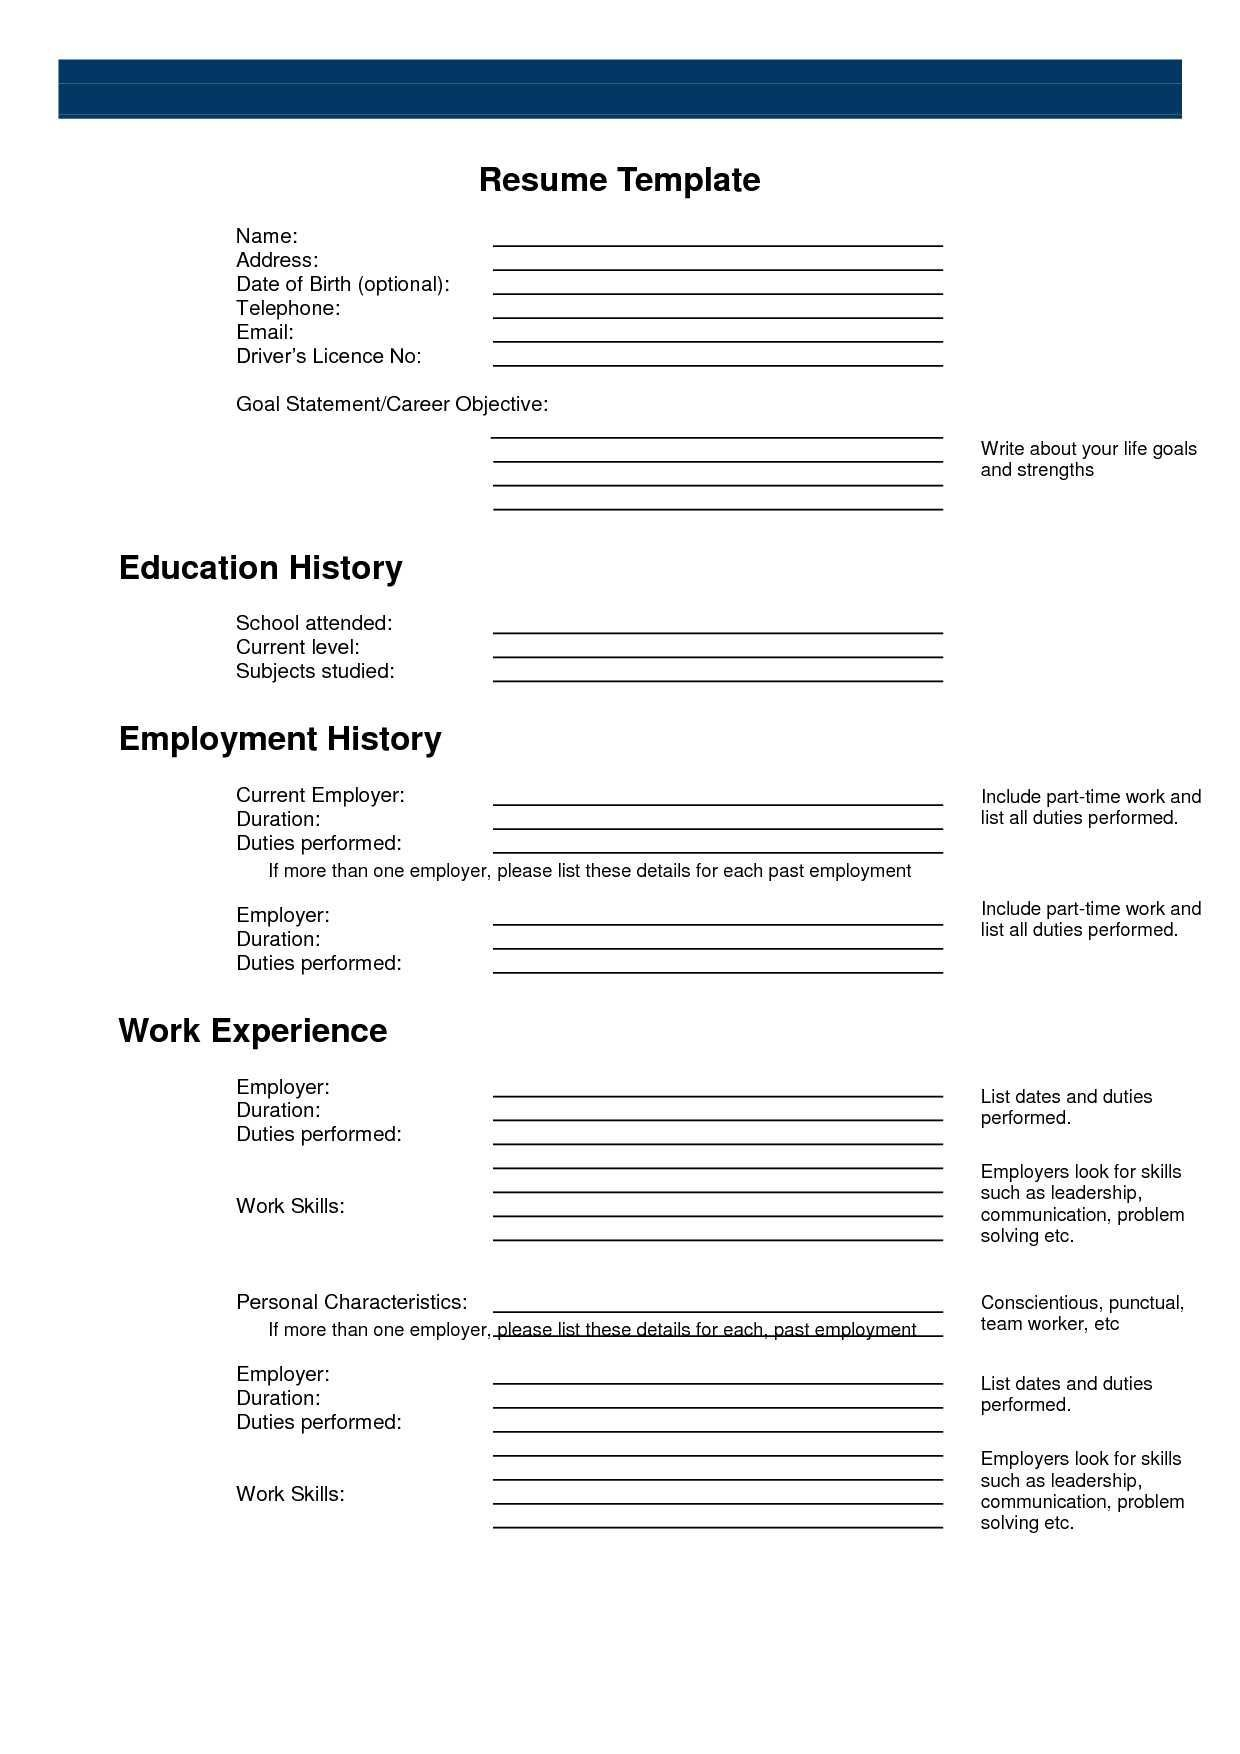 Pinanishfeds On Resumes | Sample Resume Templates, Free - Free Online Resume Templates Printable